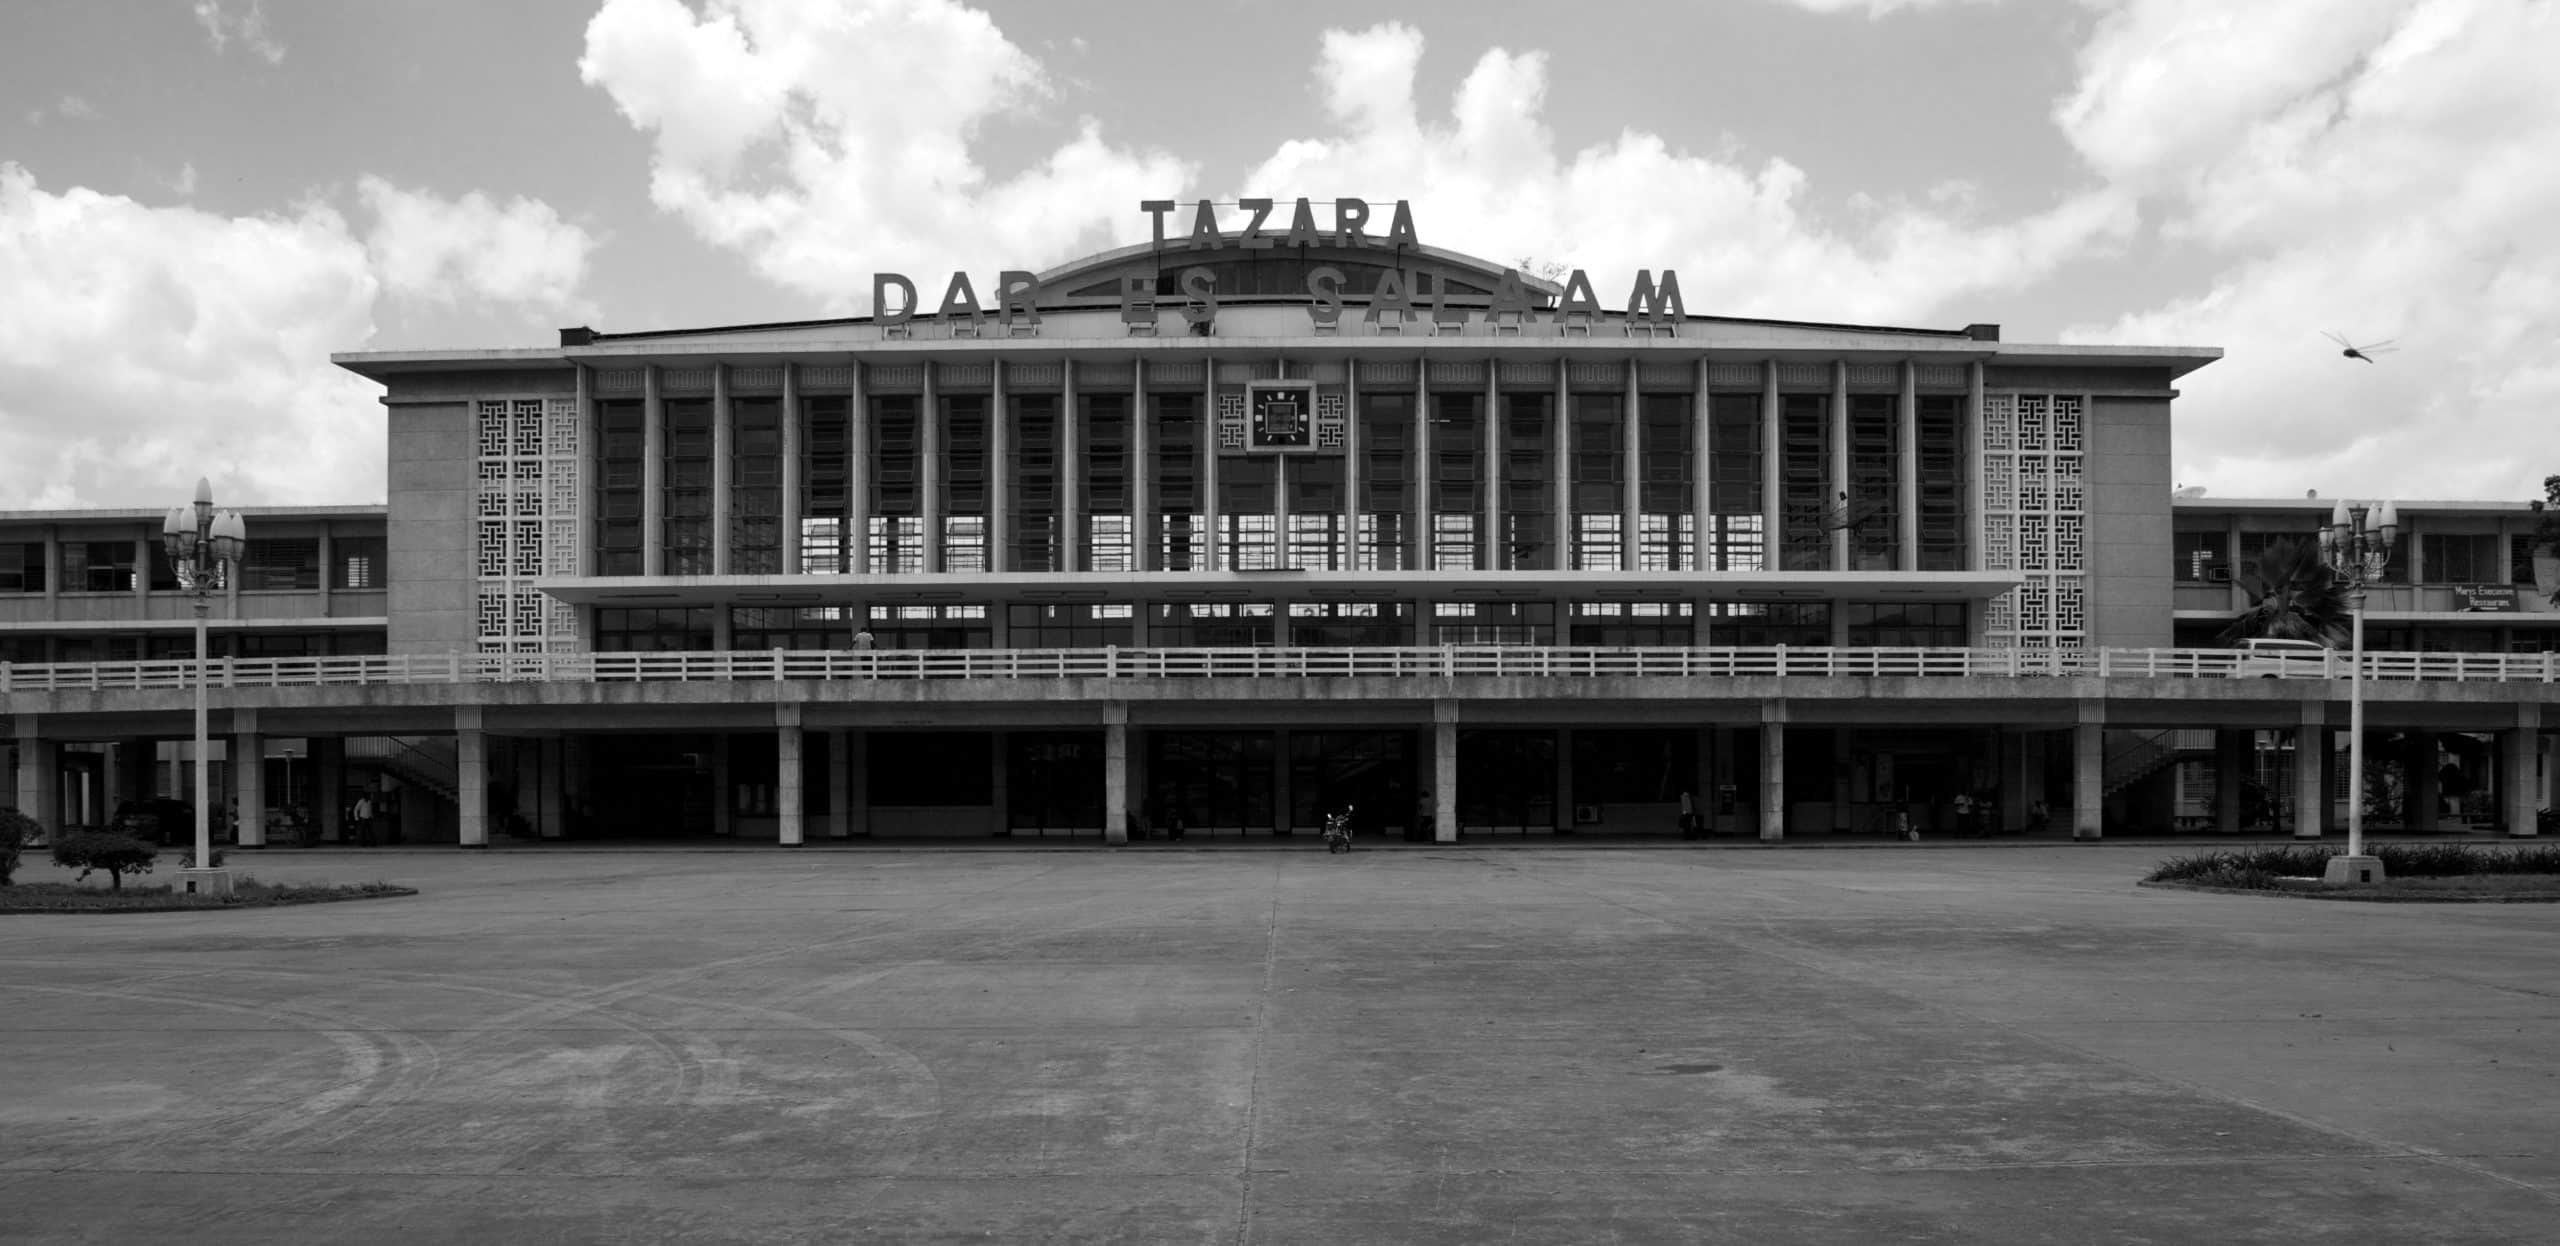 TAZARA Train Station in Dar es Salaam